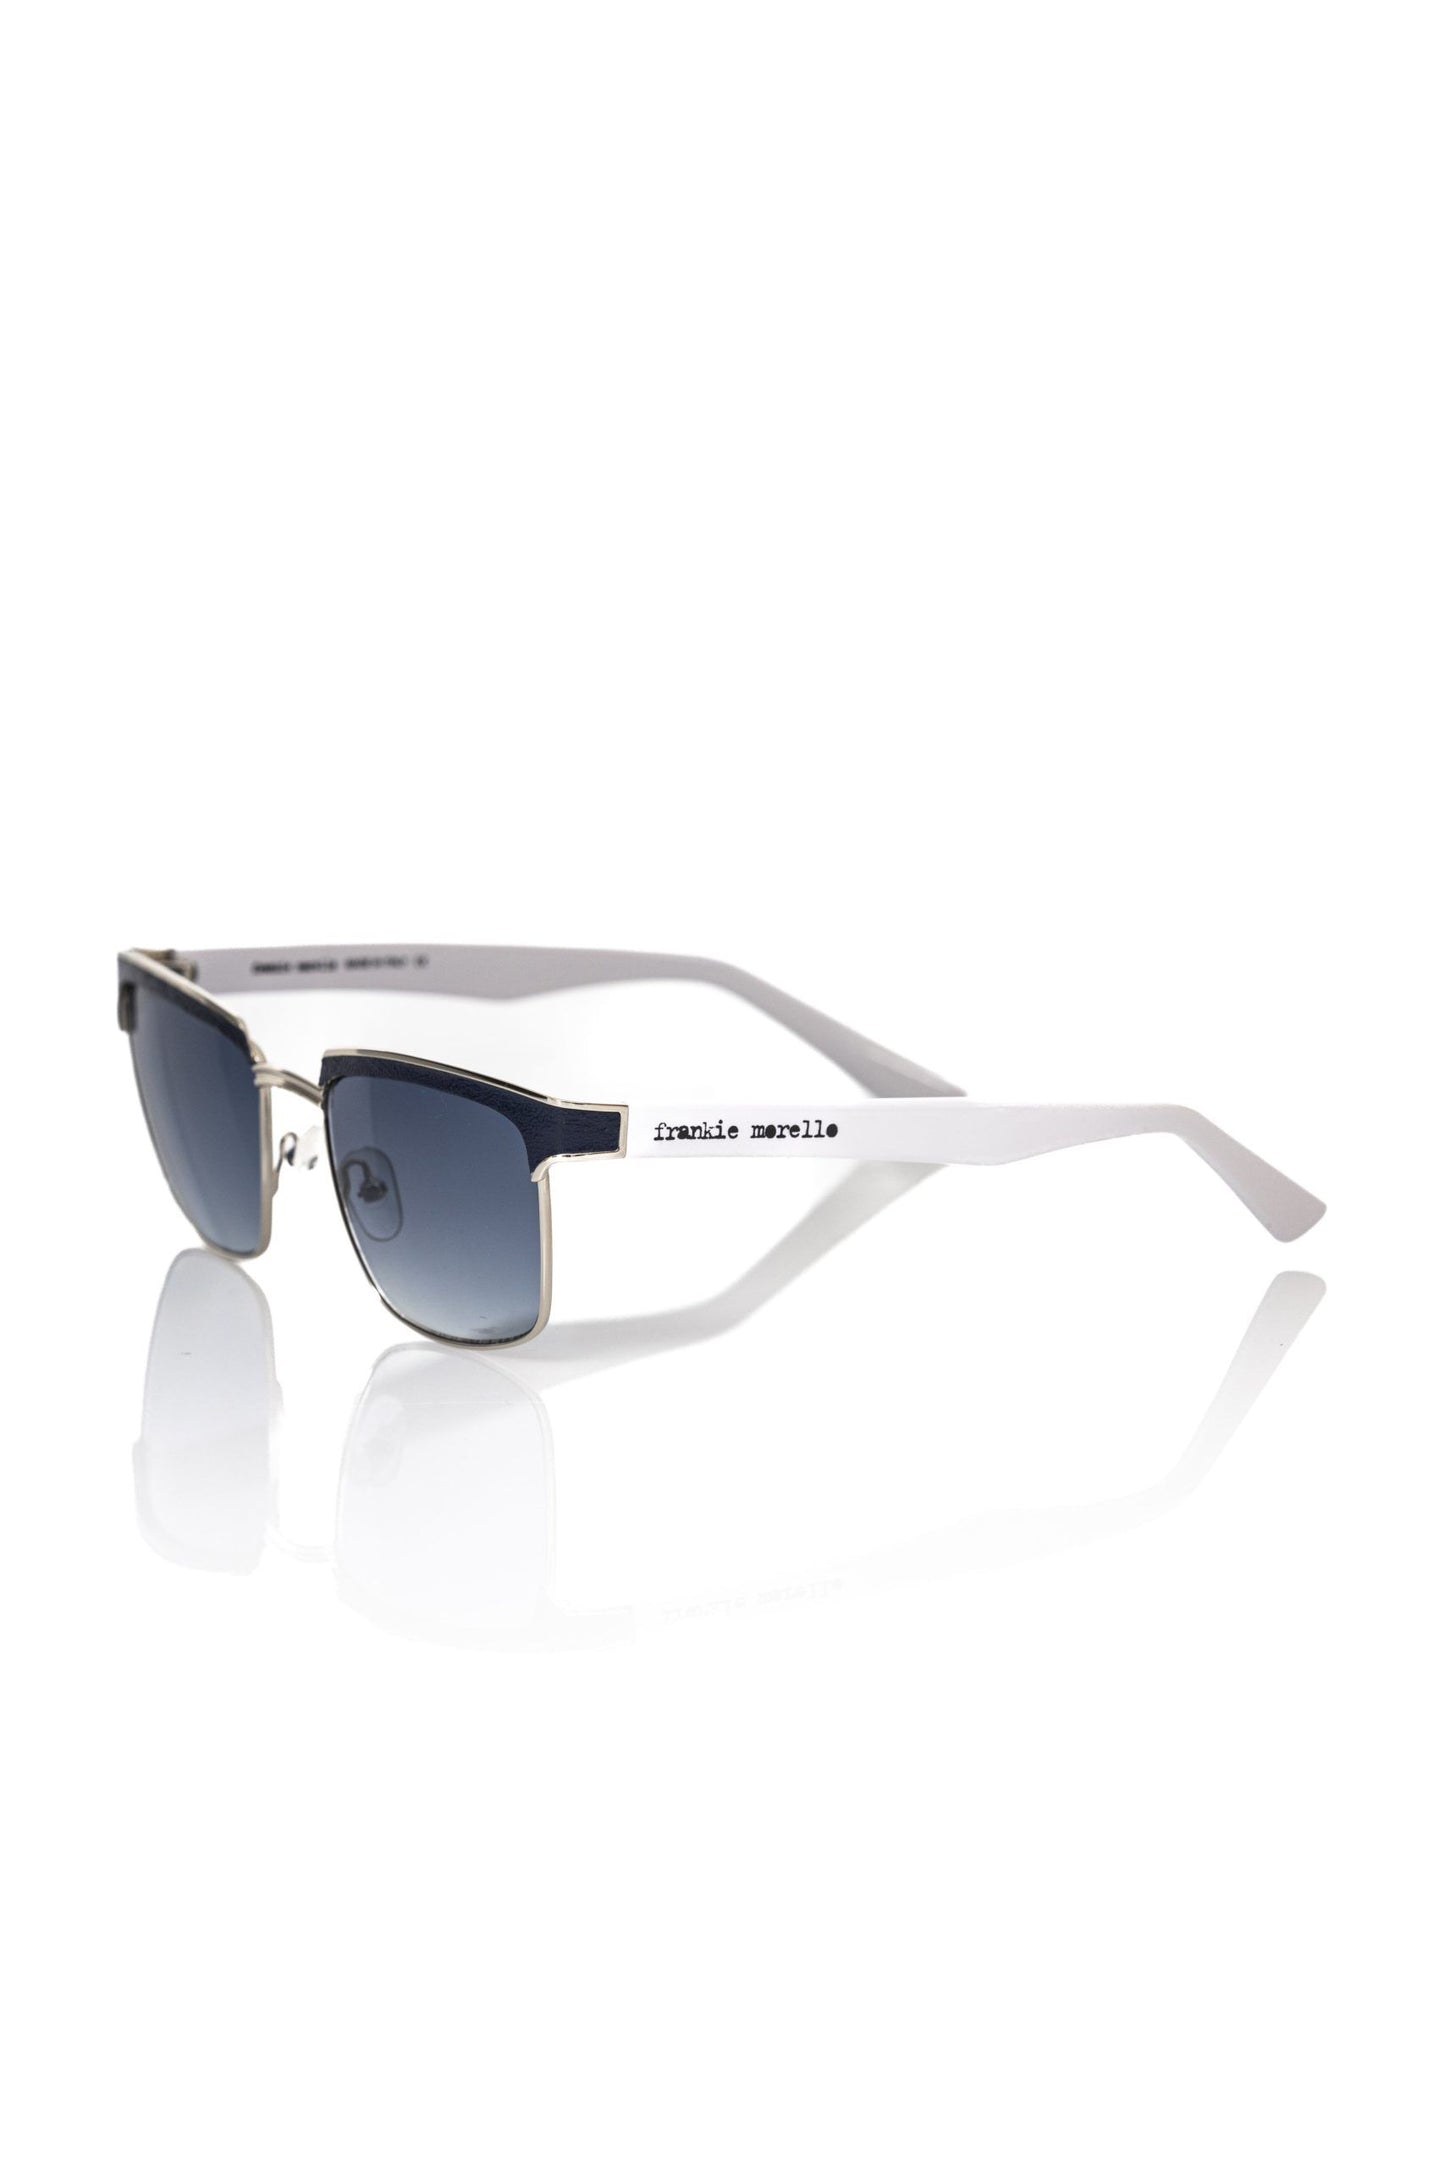 Frankie Morello FRMO-22133 Black Metallic Fibre Sunglasses